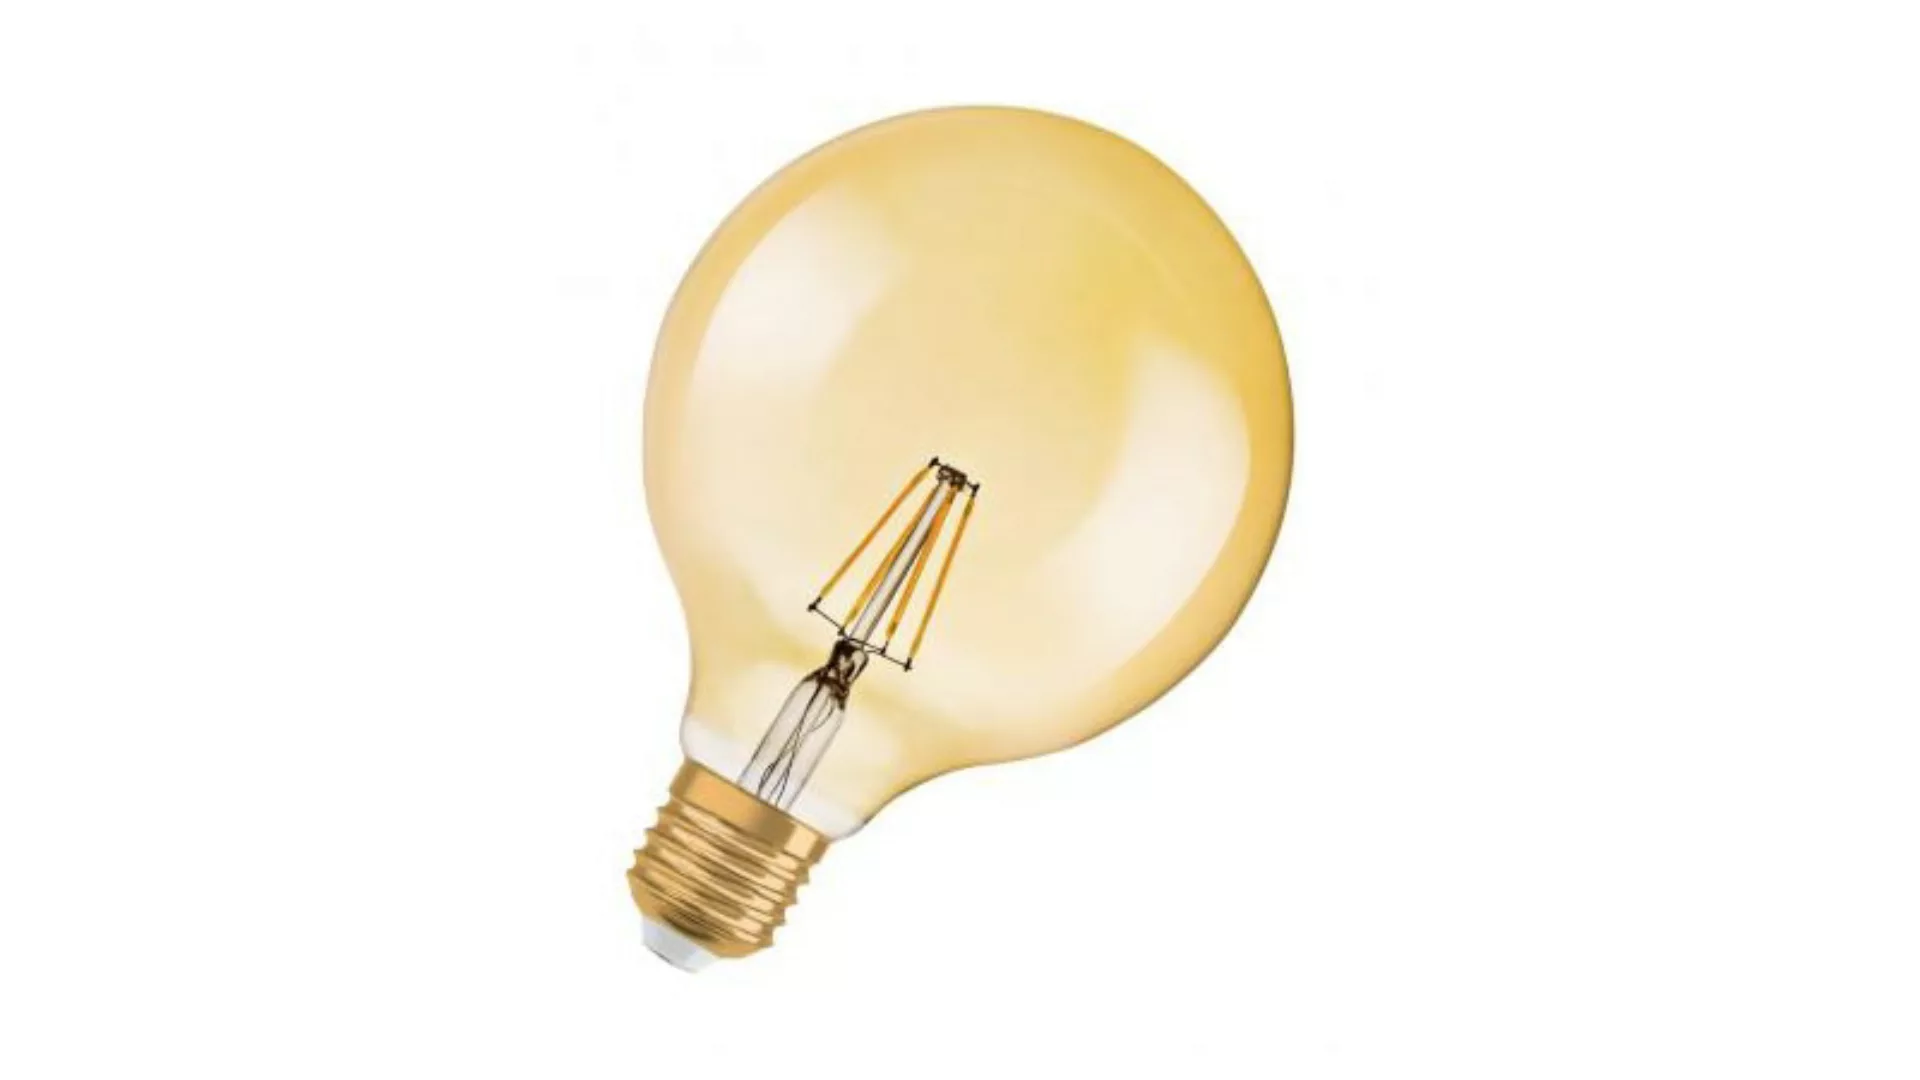 Osram LED-Leuchtmittel E27 Globeform 6,5 W 720 lm 16,8 x 12,4 cm (H x Ø) günstig online kaufen